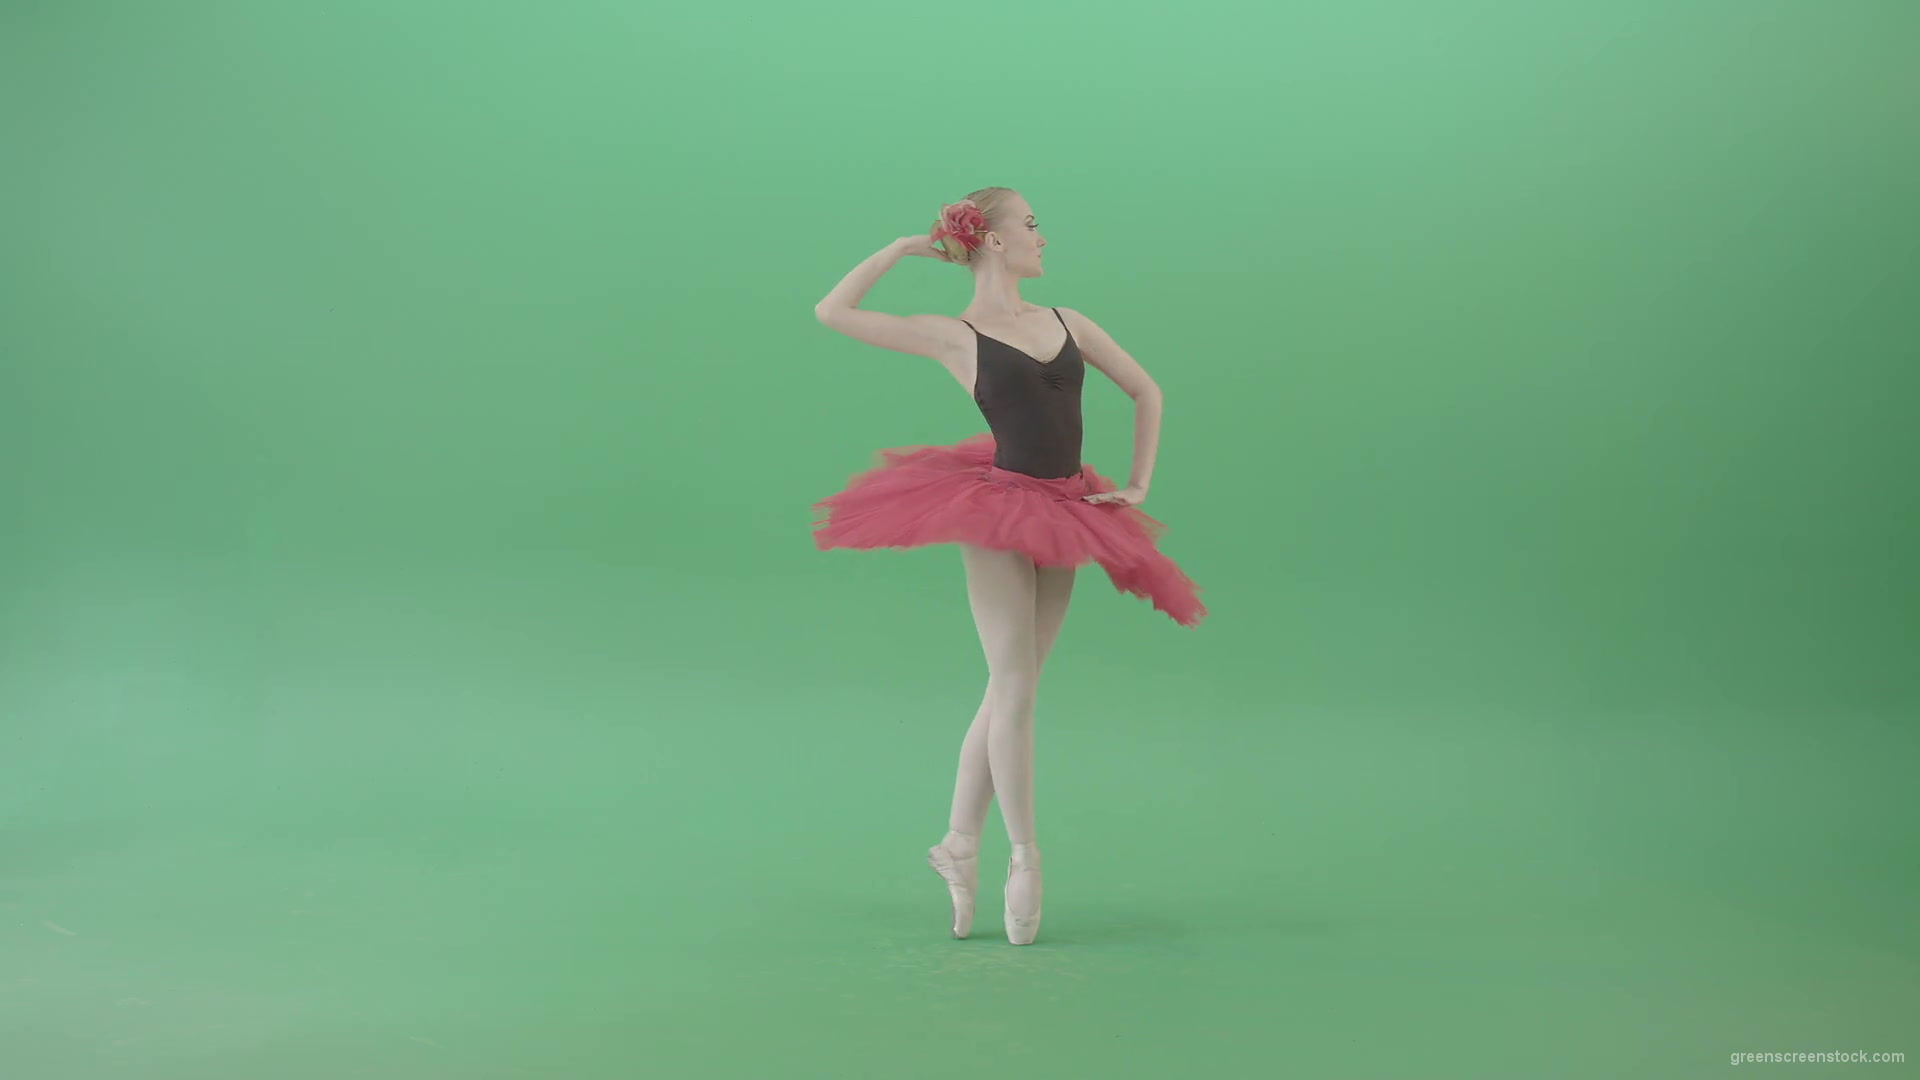 Happy-smiling-ballet-girl-ballerina-spinning-in-dance-on-green-screen-4K-Video-Footage-1920_008 Green Screen Stock